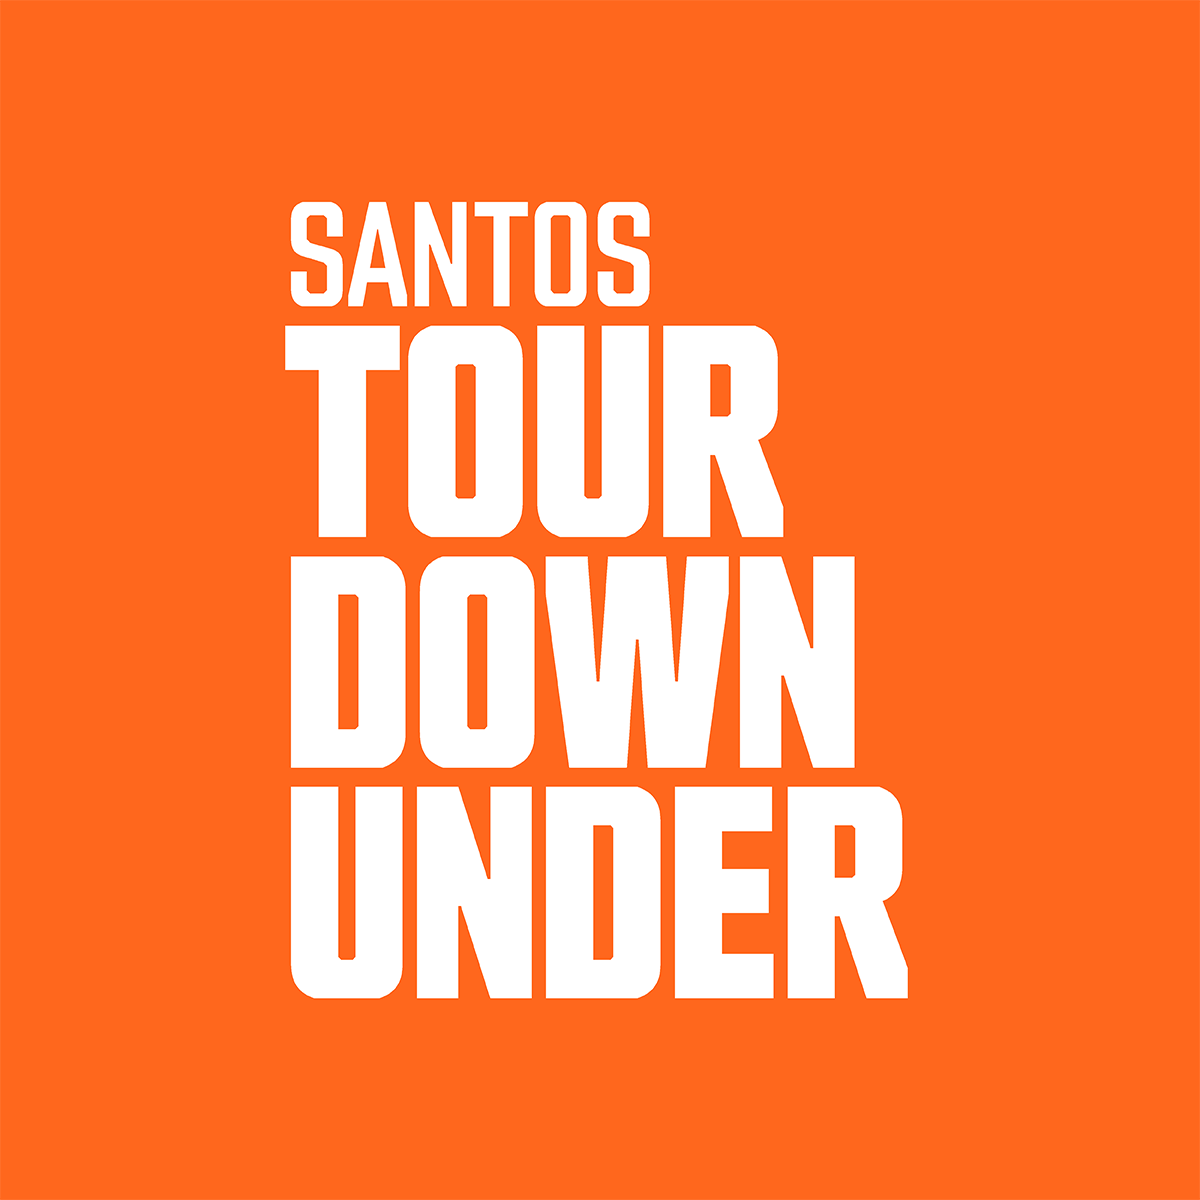 Santos Tour Down Under